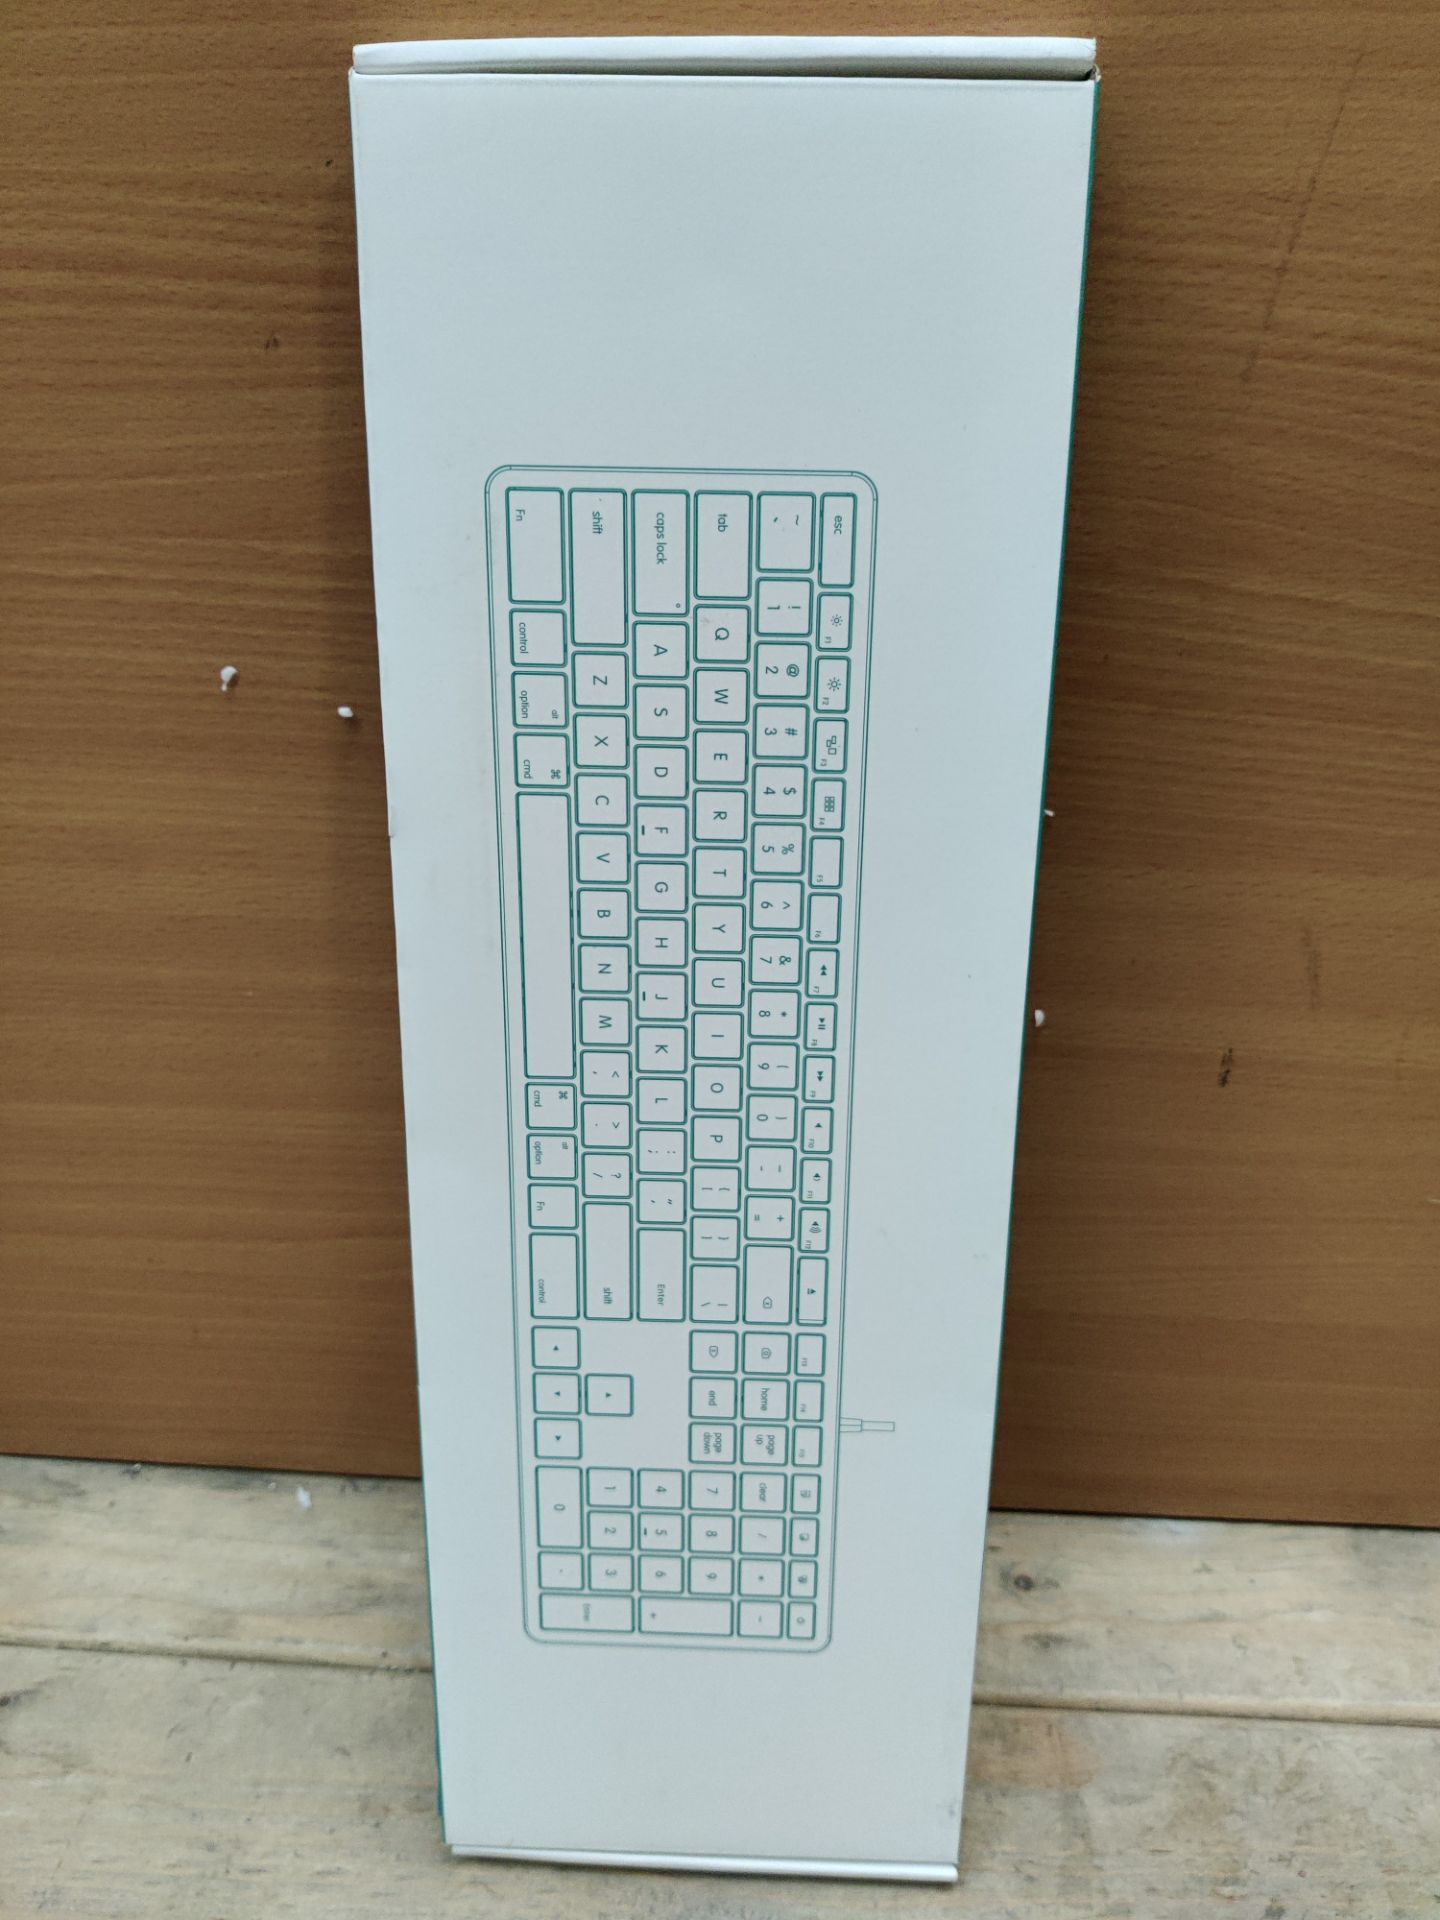 RRP £30.81 Seenda Wired Keyboard for Mac OS - Image 2 of 2